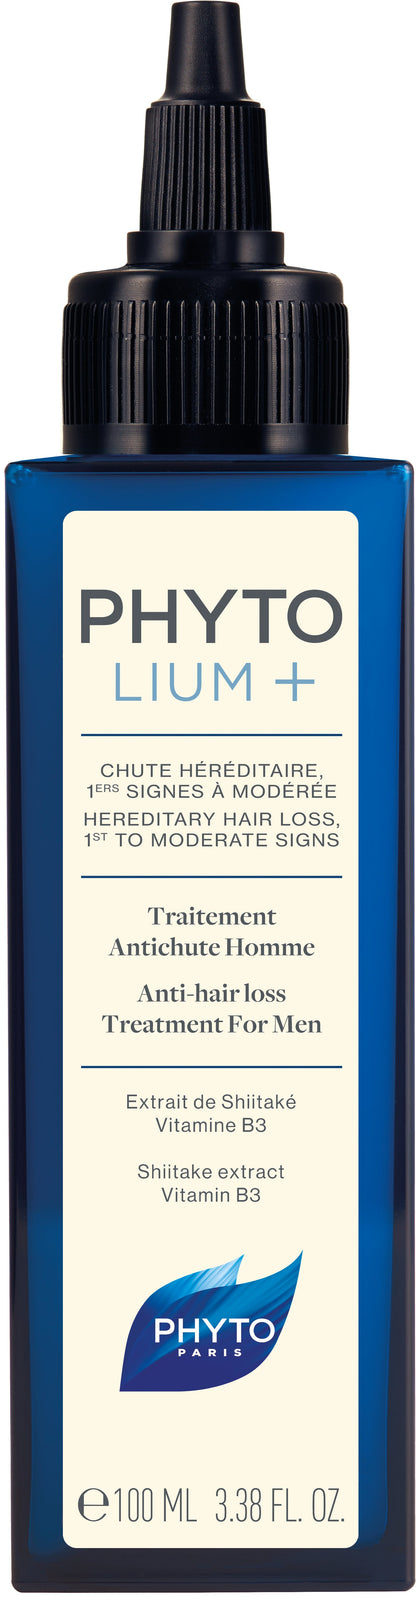 Phyto - Phytolium+ Anti-hair loss Treatment for Men 100ml